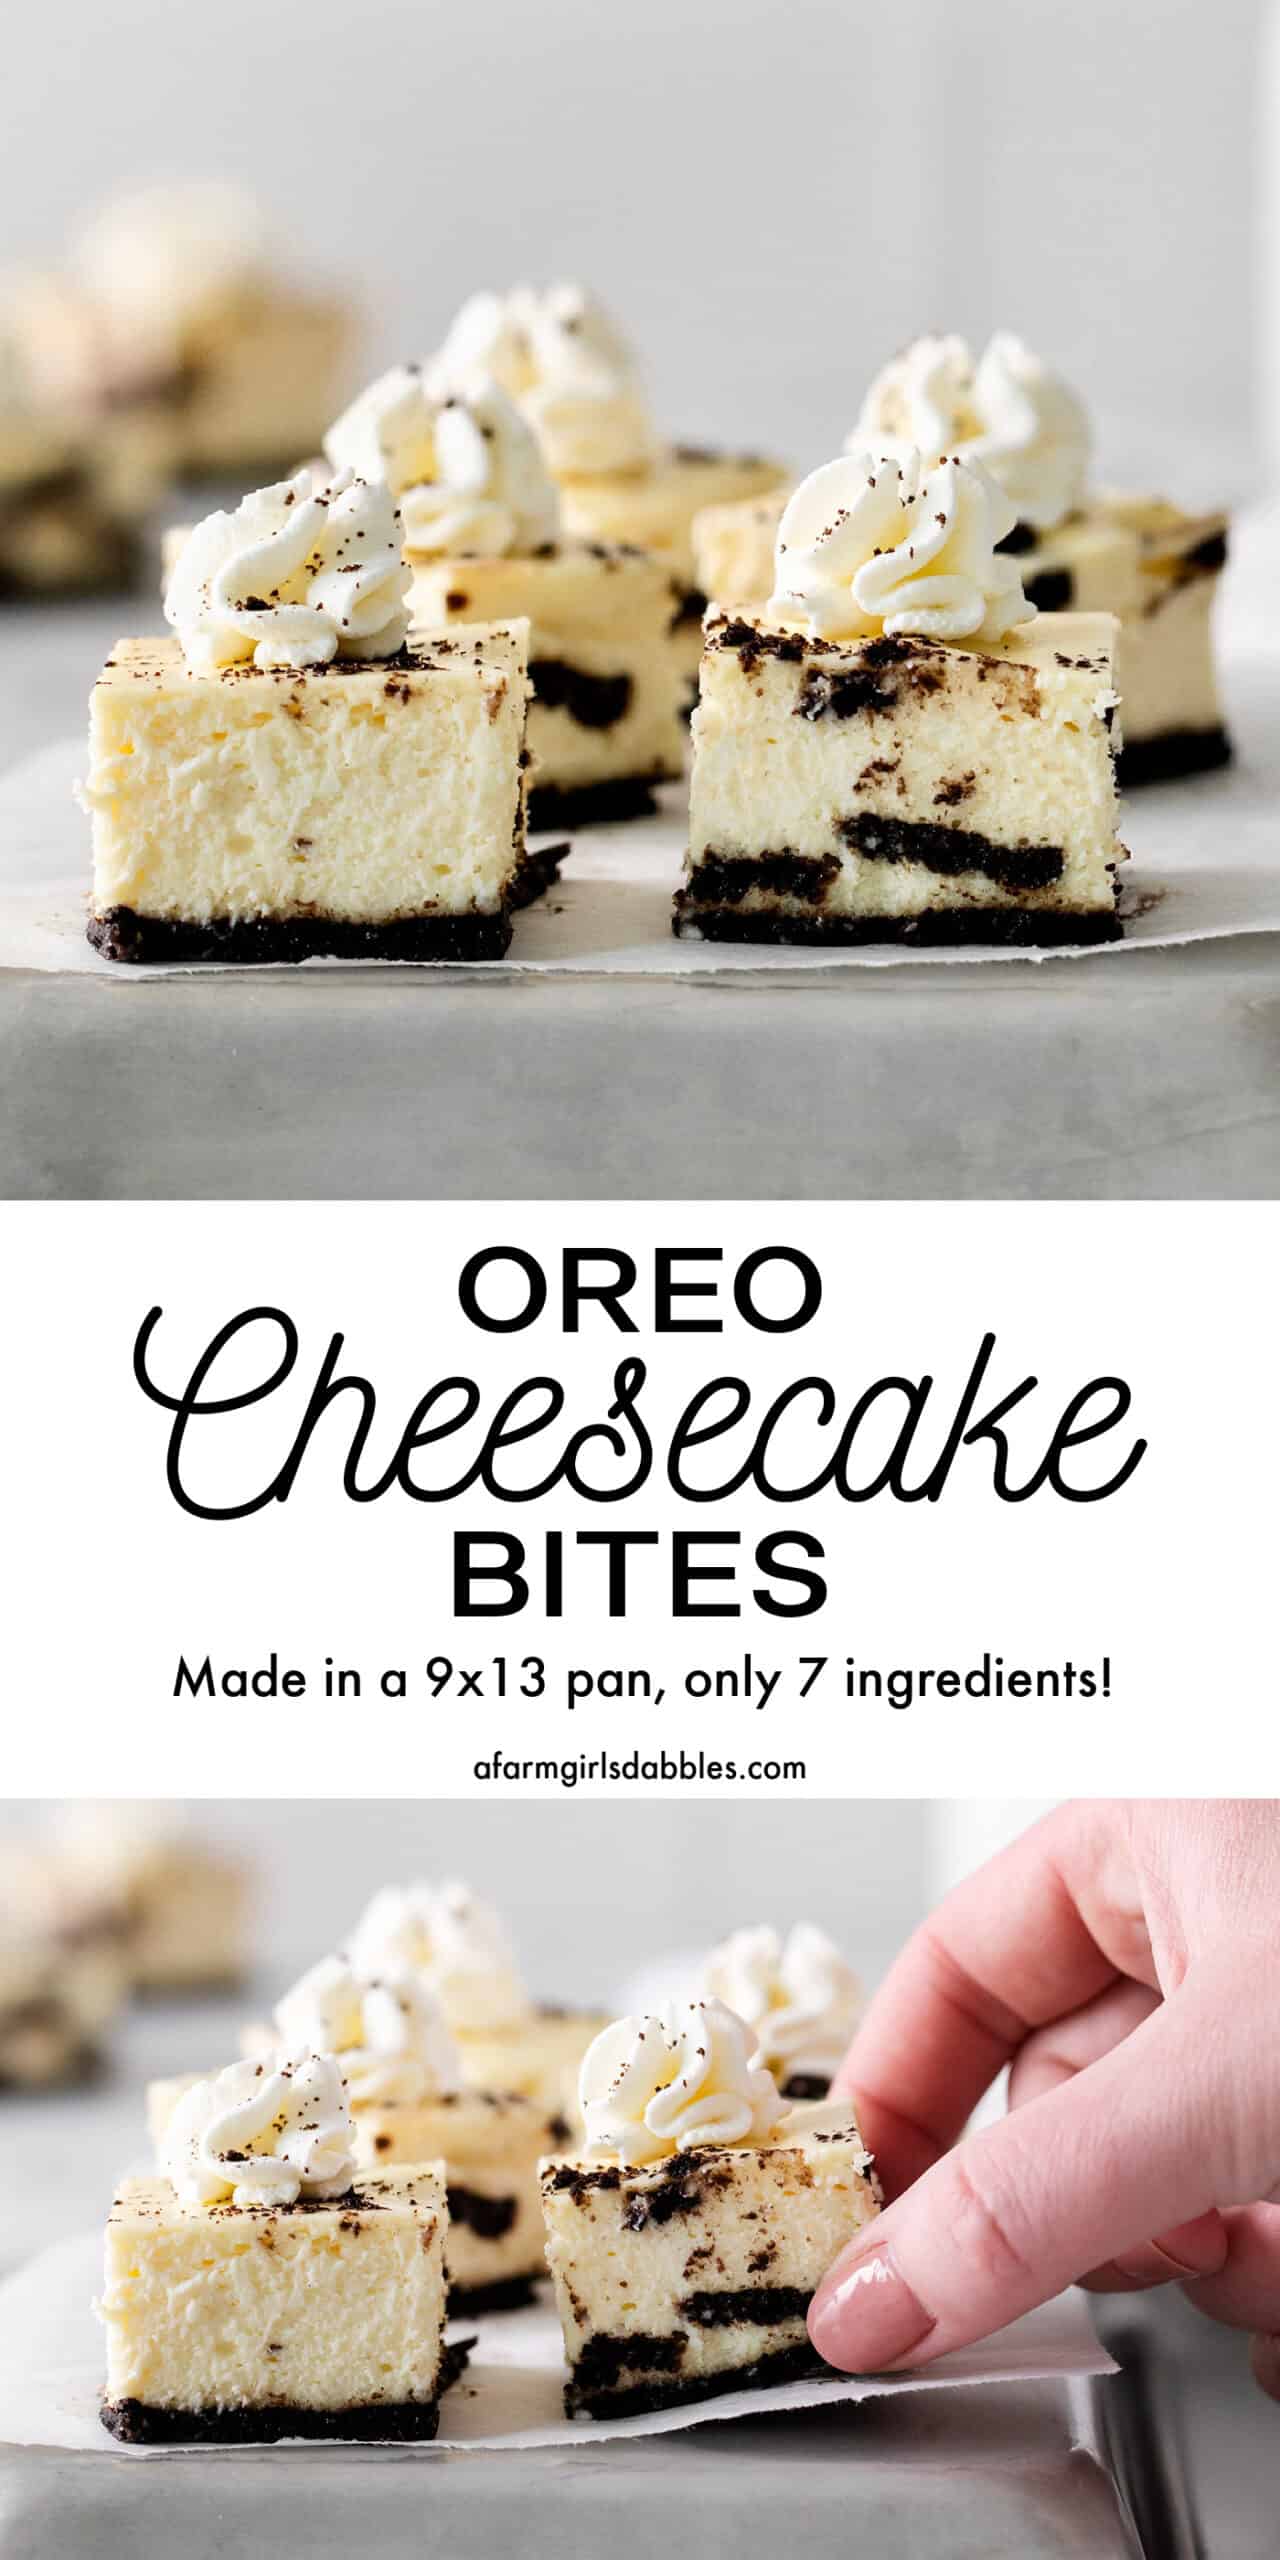 Pinterest image for Oreo cheesecake bites